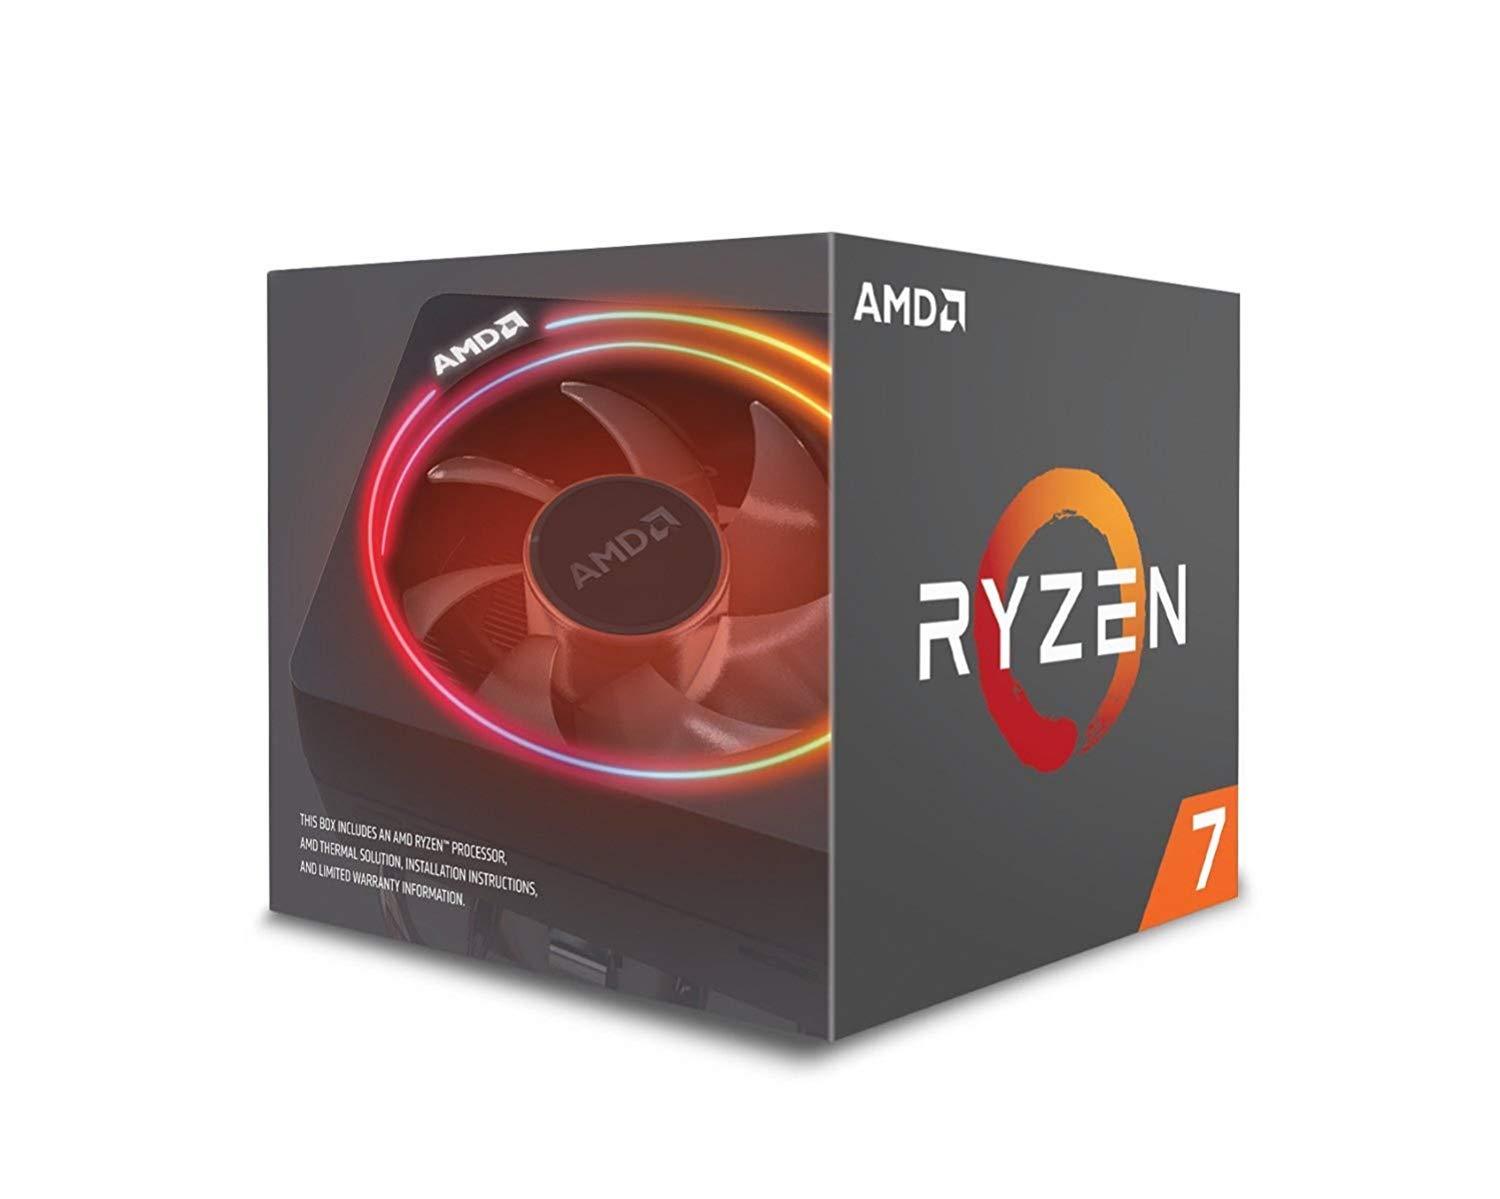 AMD Ryzen 7 2700X Desktop Processor